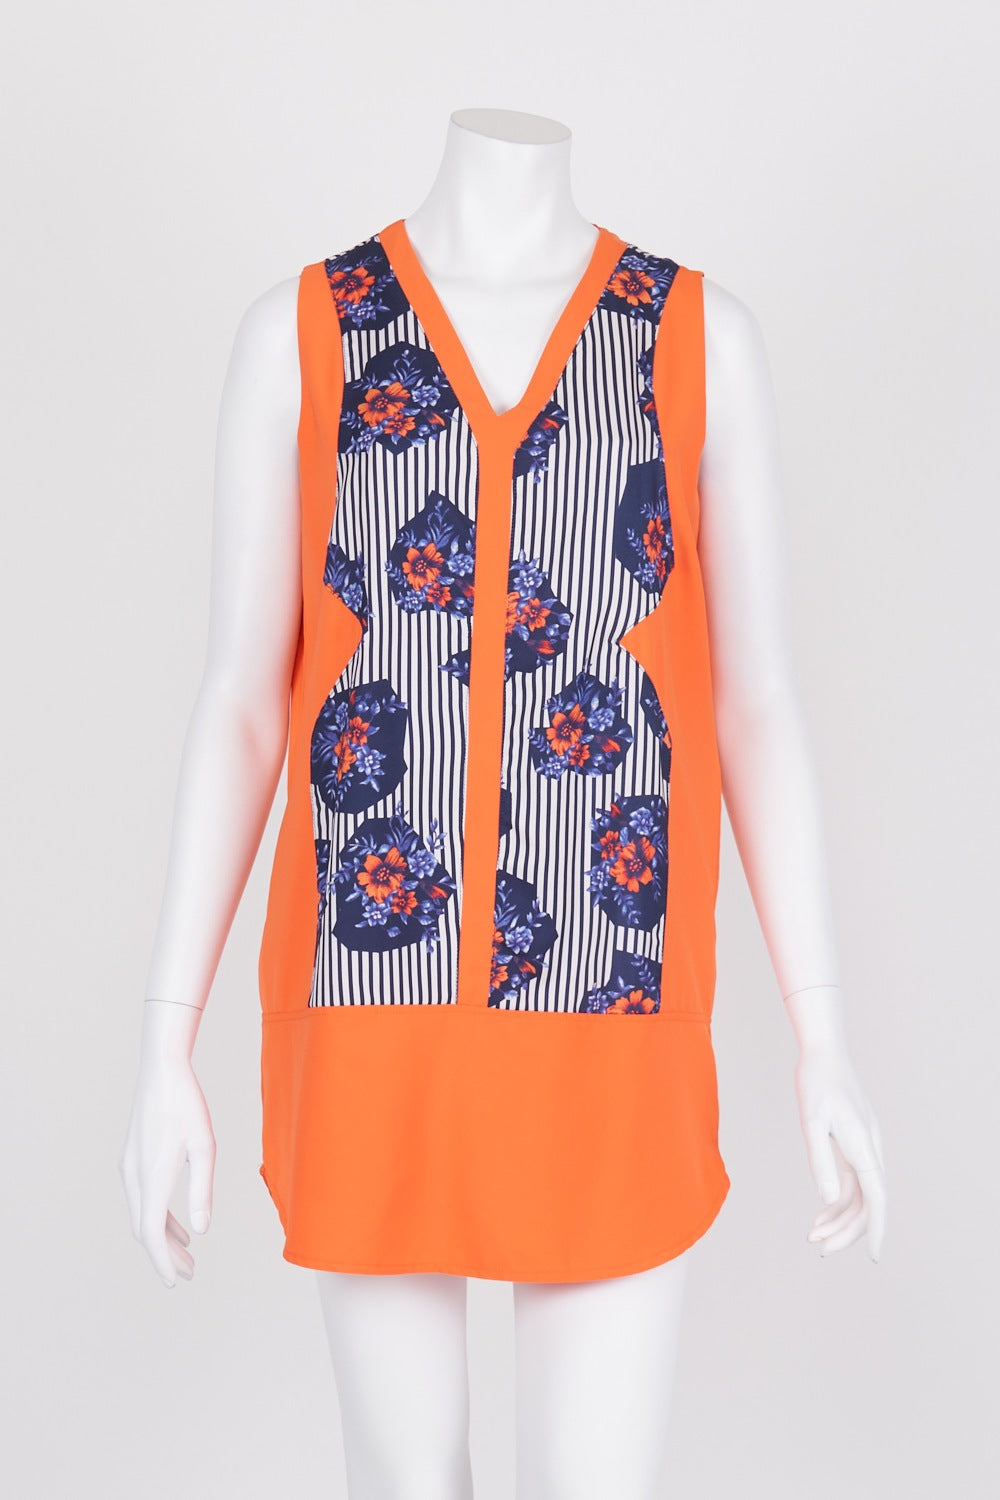 Angel Biba Orange Patterned Sleeveless Dress 8